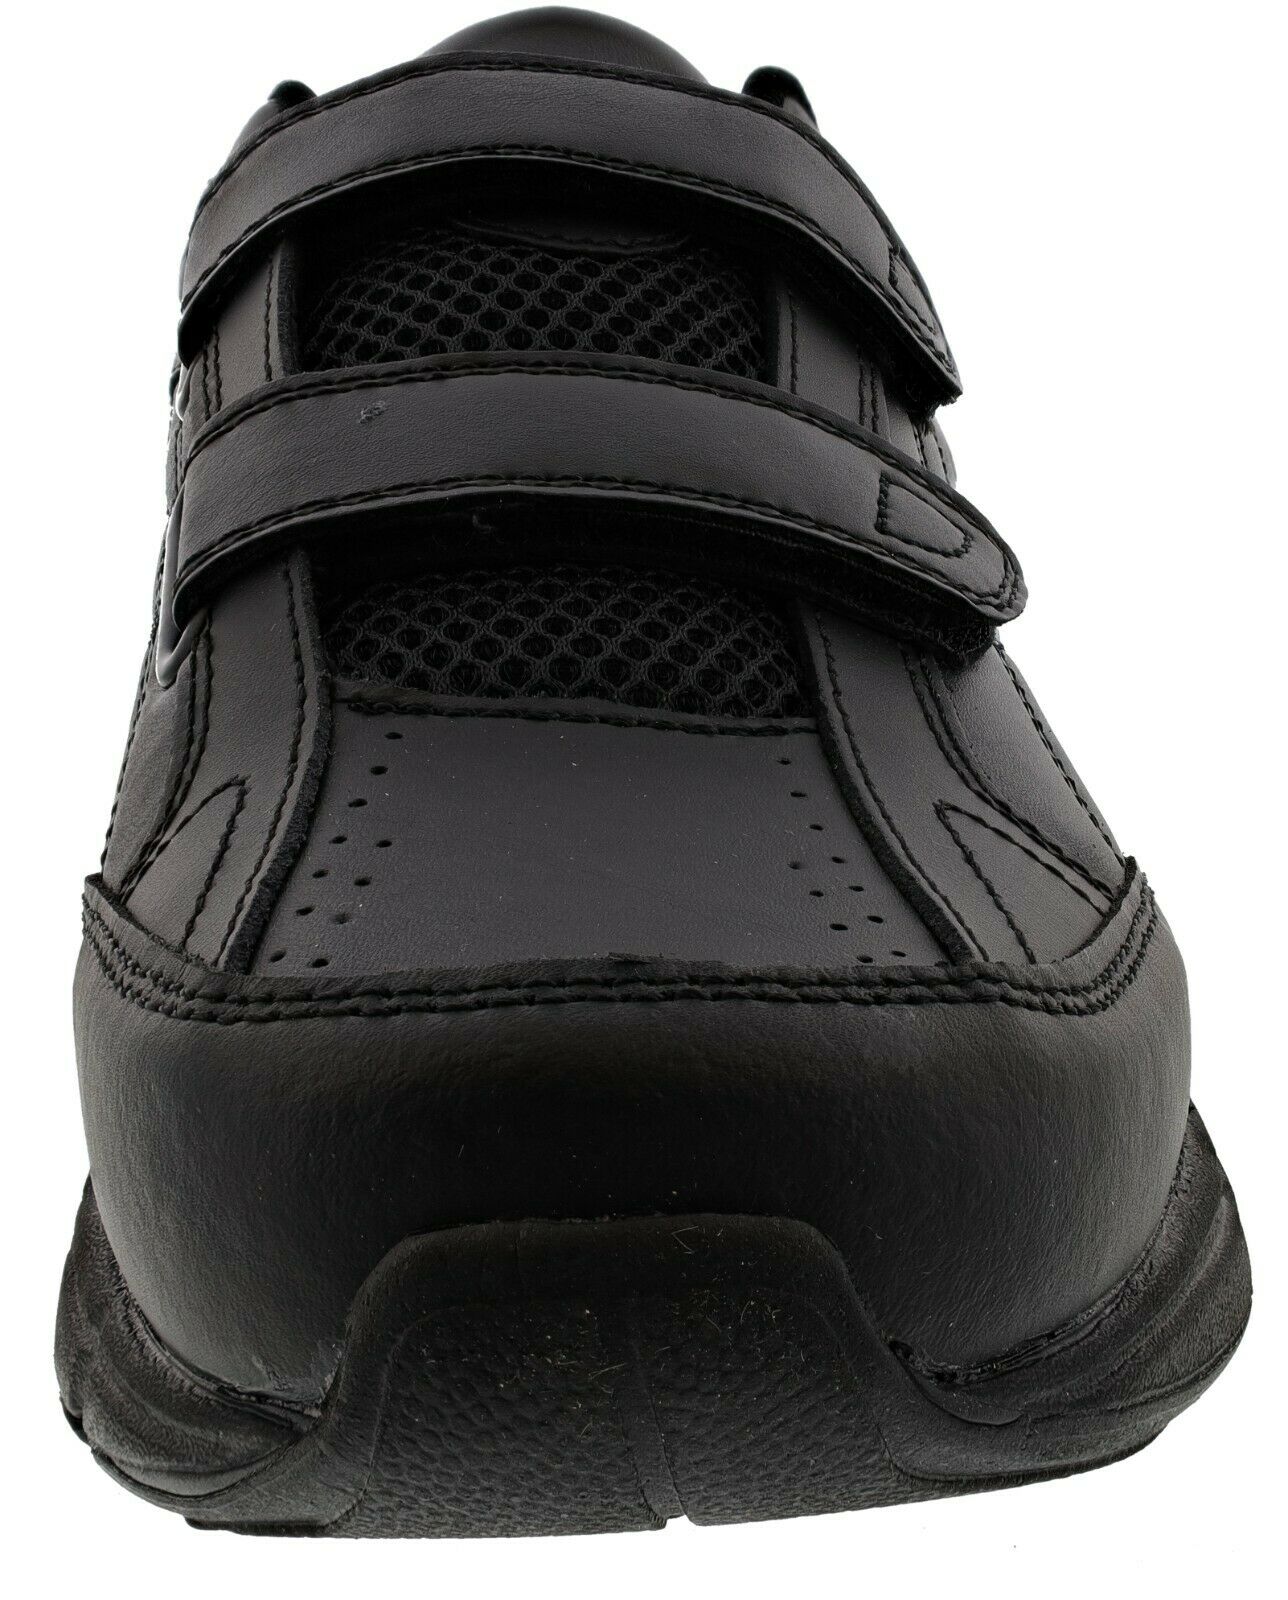 Dr Scholl’s Men’s Brisk Dual Strap Wide Width Walking Shoes - image 3 of 6